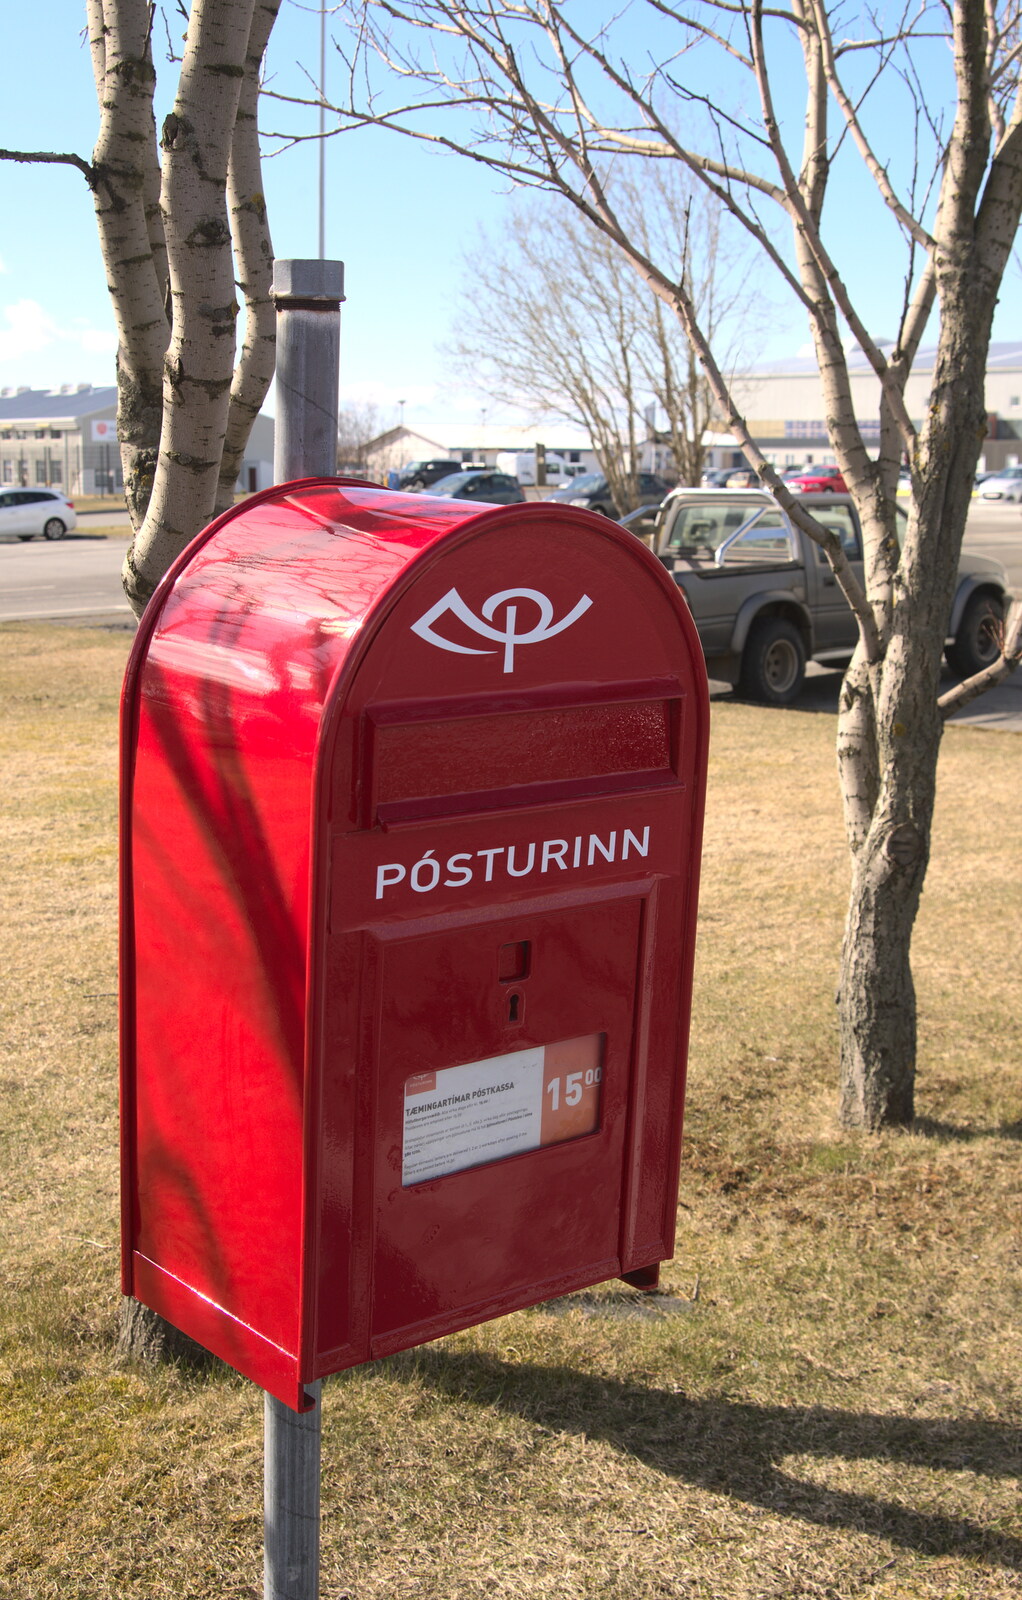 An Icelandic post box from Stríðsminjar War Relics, Perlan and Street Art, Reykjavik, Iceland - 23rd April 2017